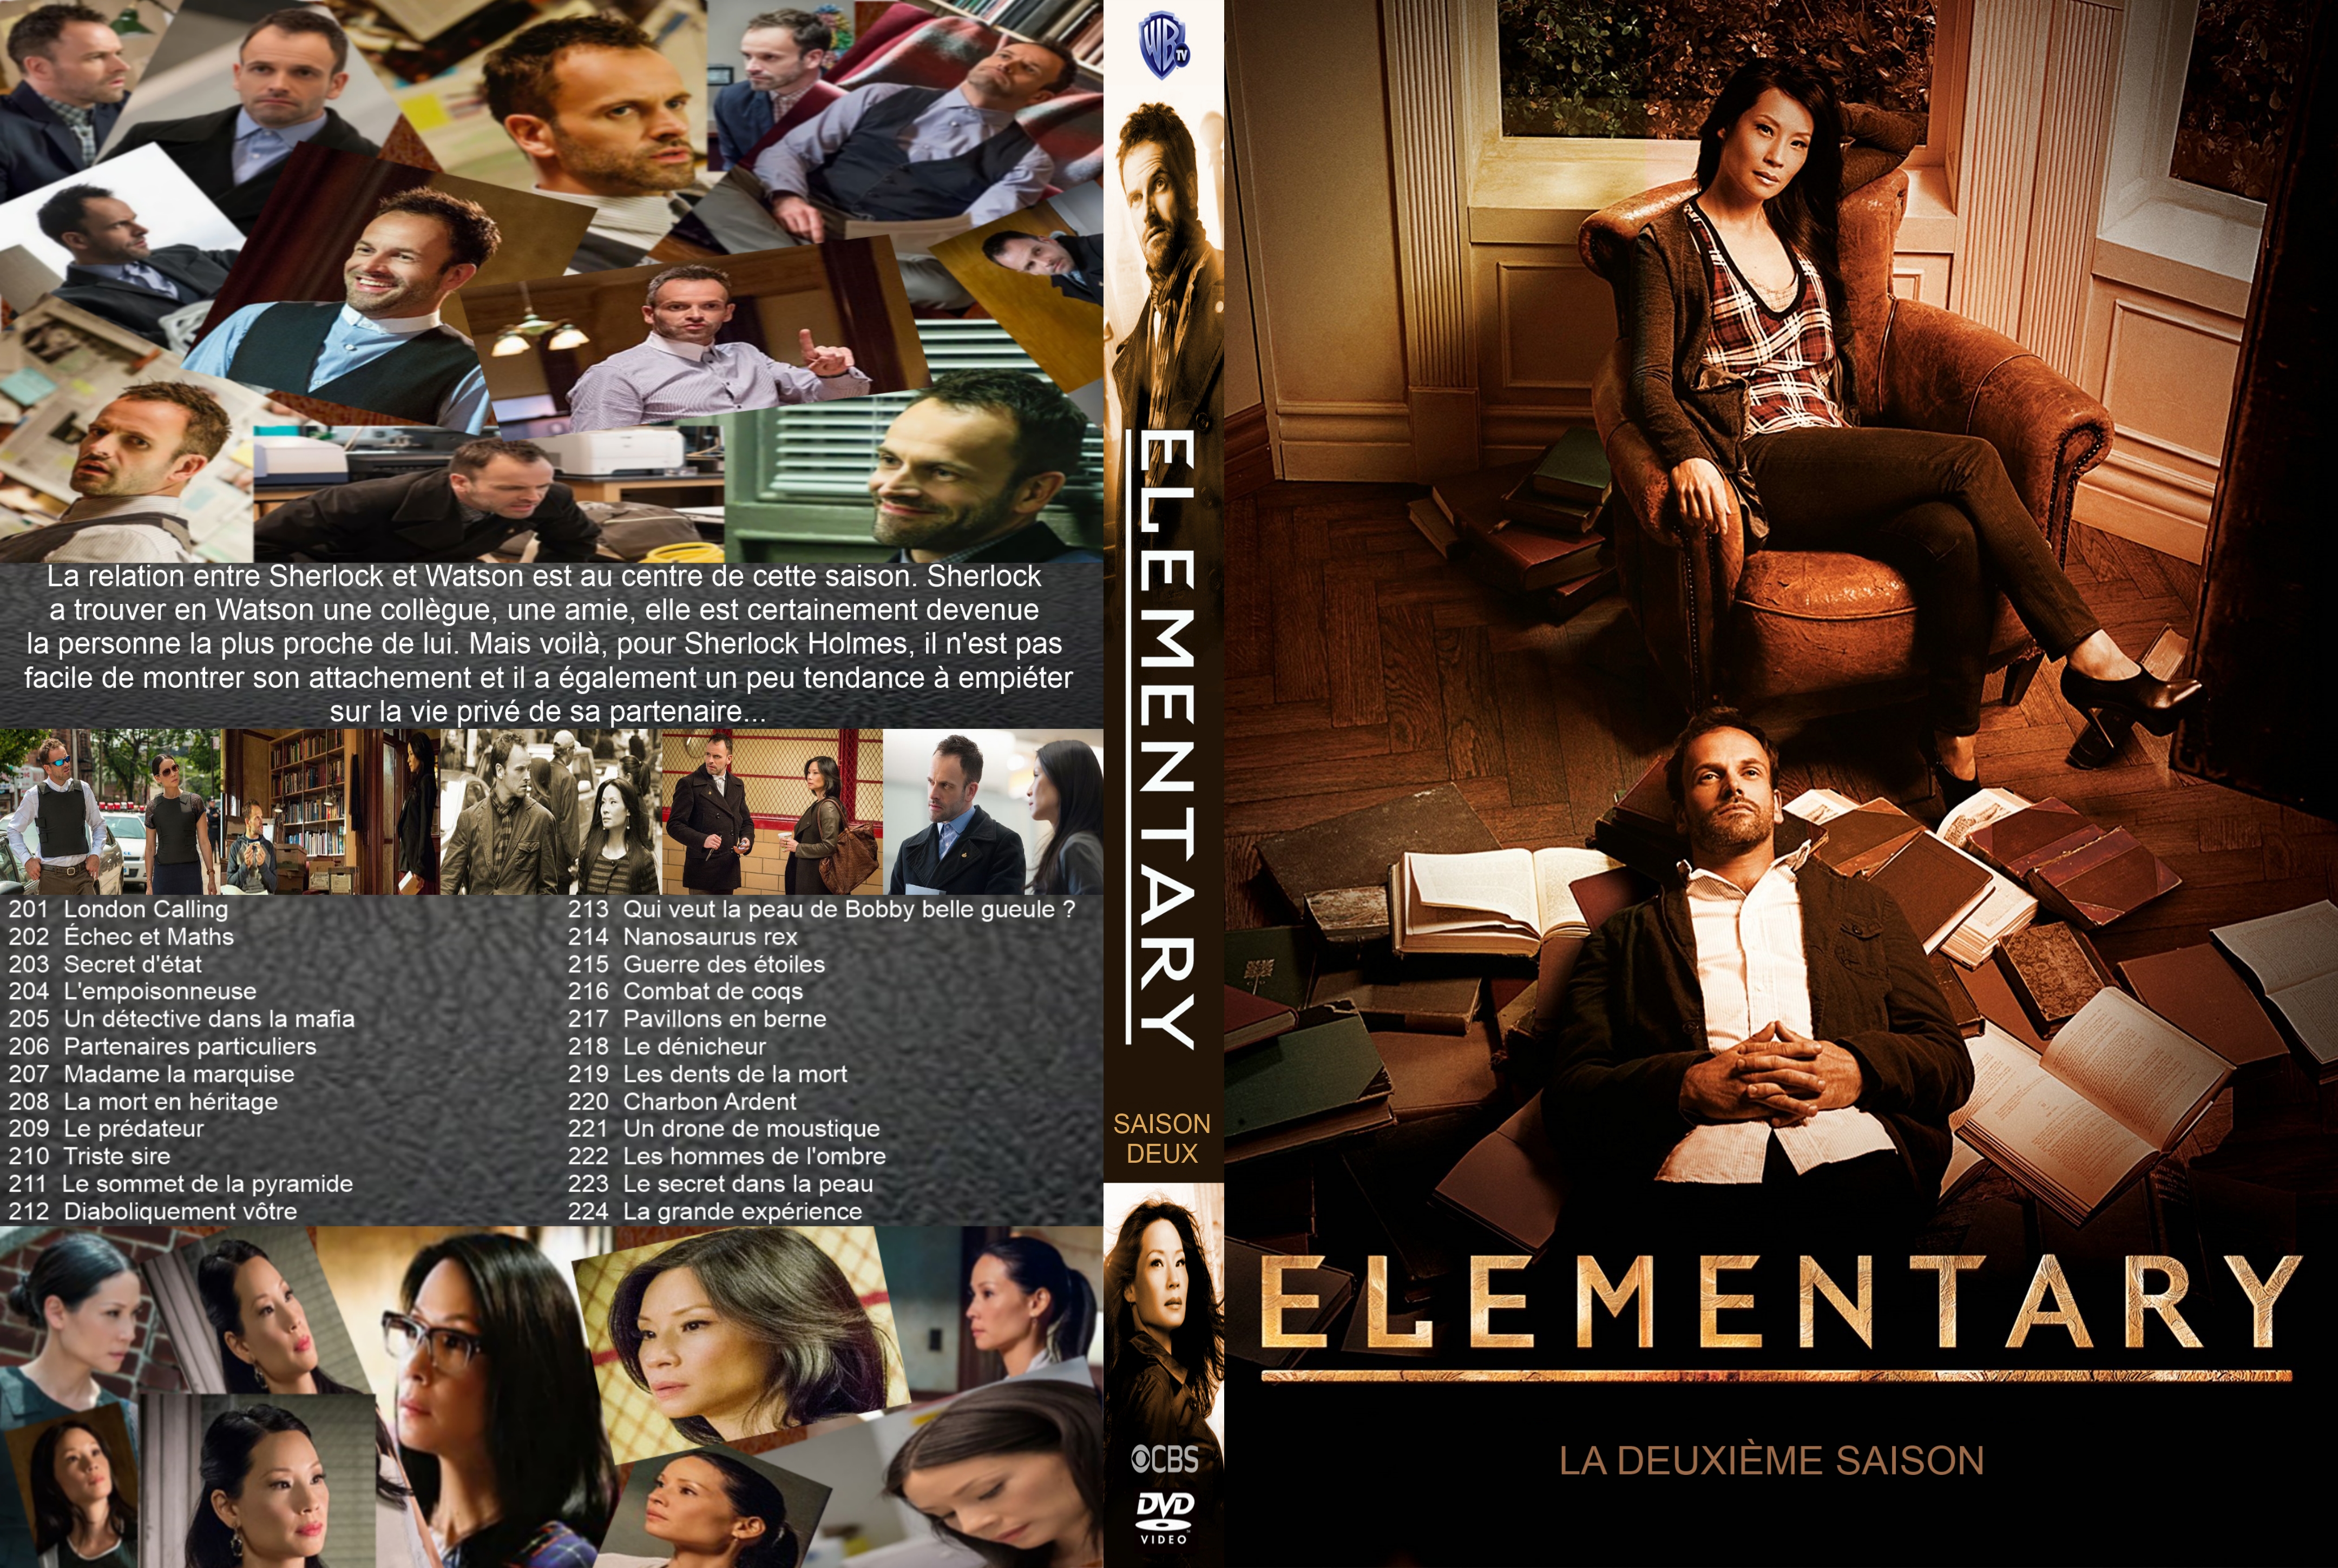 Jaquette DVD Elementary Saison 2 custom